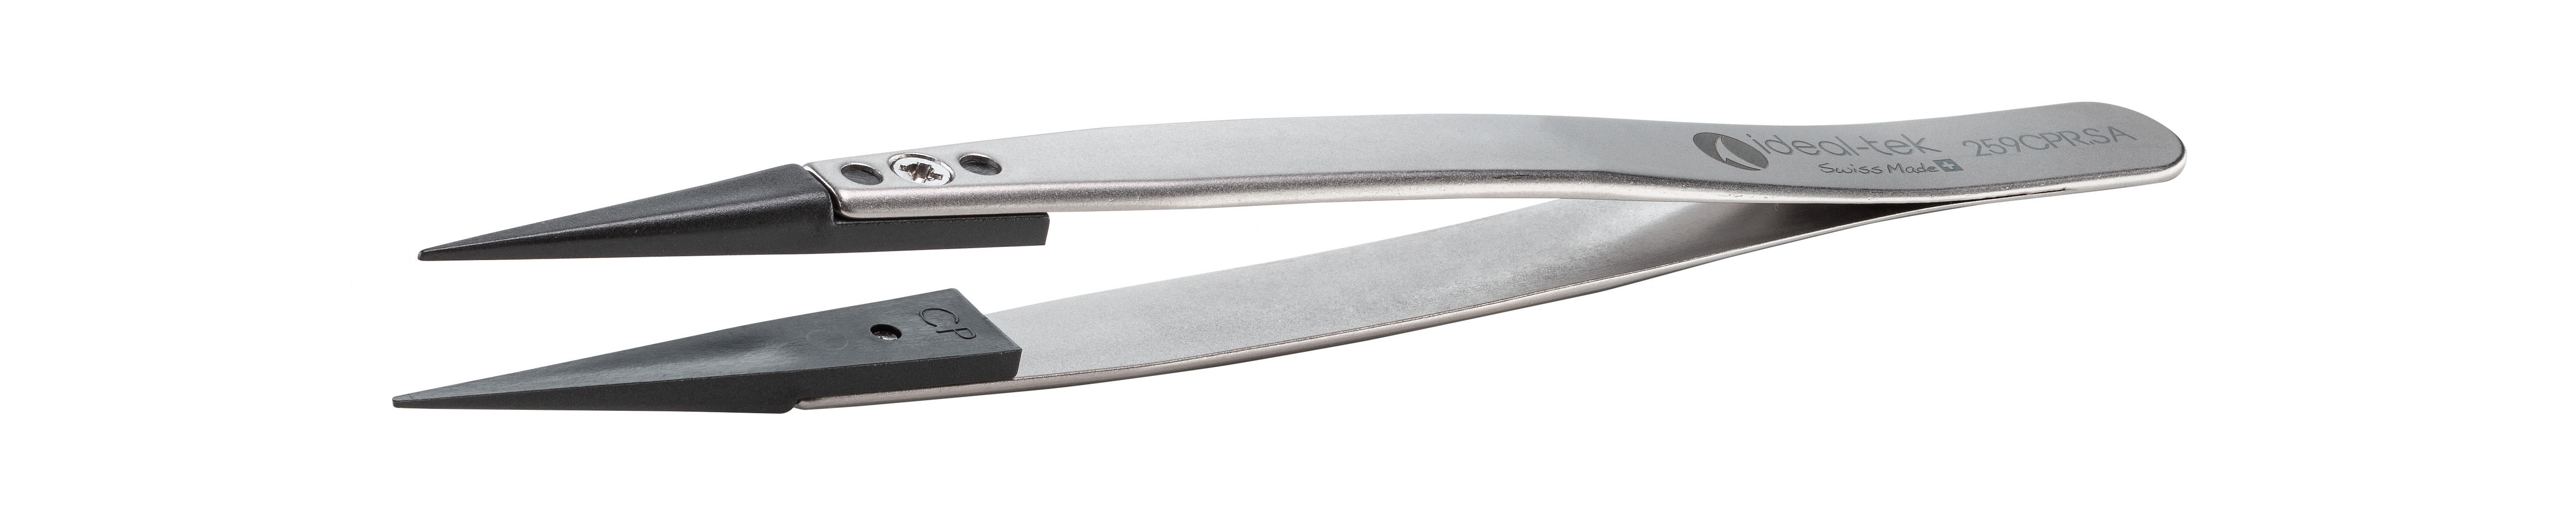 259CPR.SA.1 - Plastic Replaceable Tip Tweezers | Ideal-tek